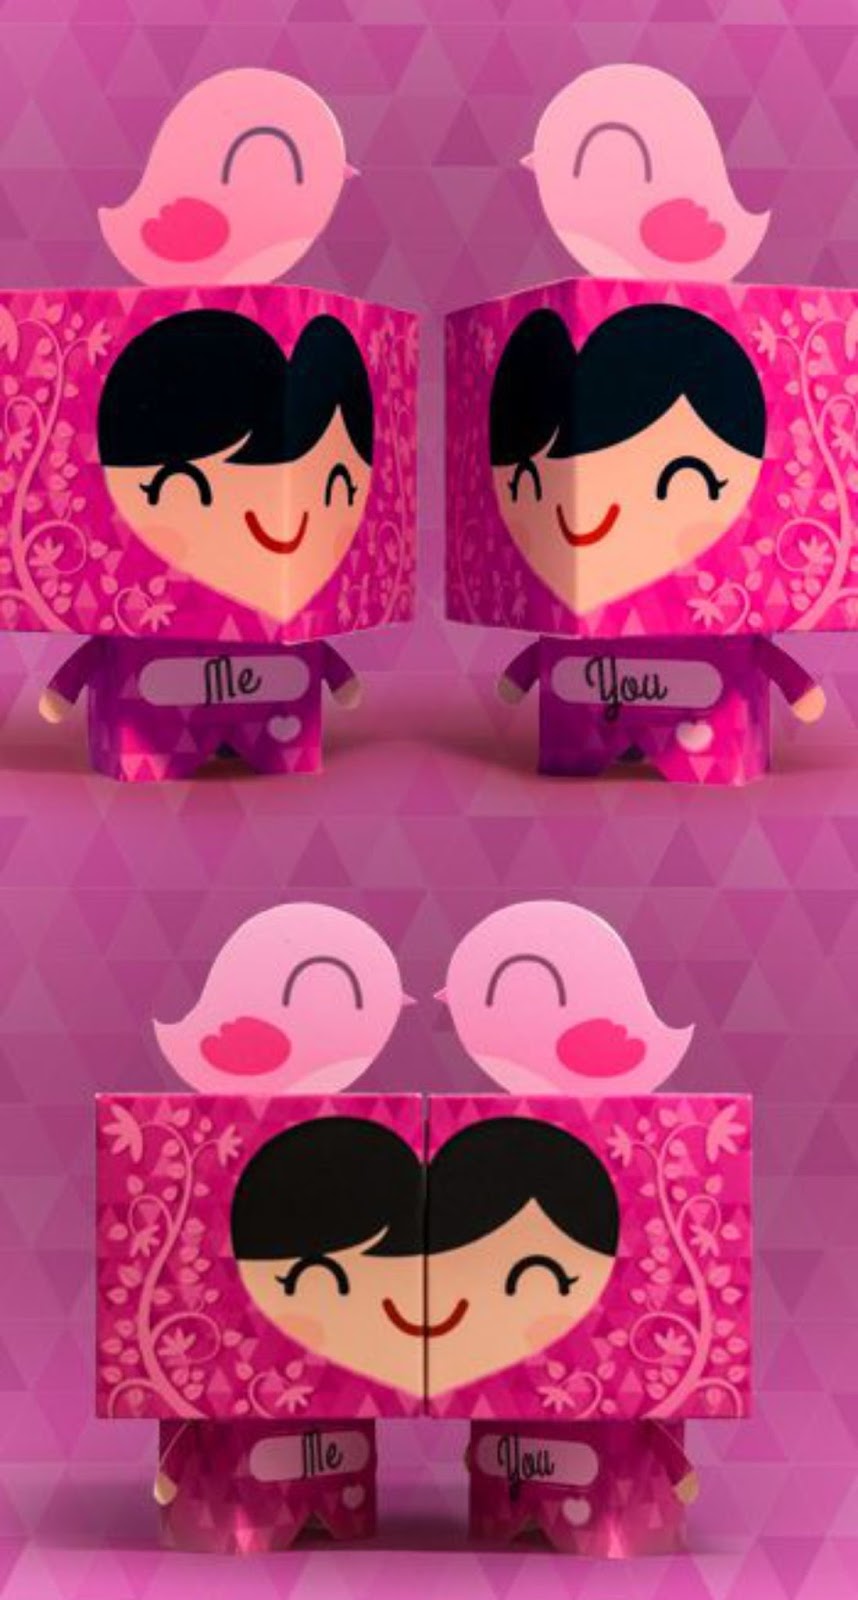 Kerajinan Anak Page 12 Cupidocreativeblog Membuat Kotak Pasangan Lucu Berbentuk